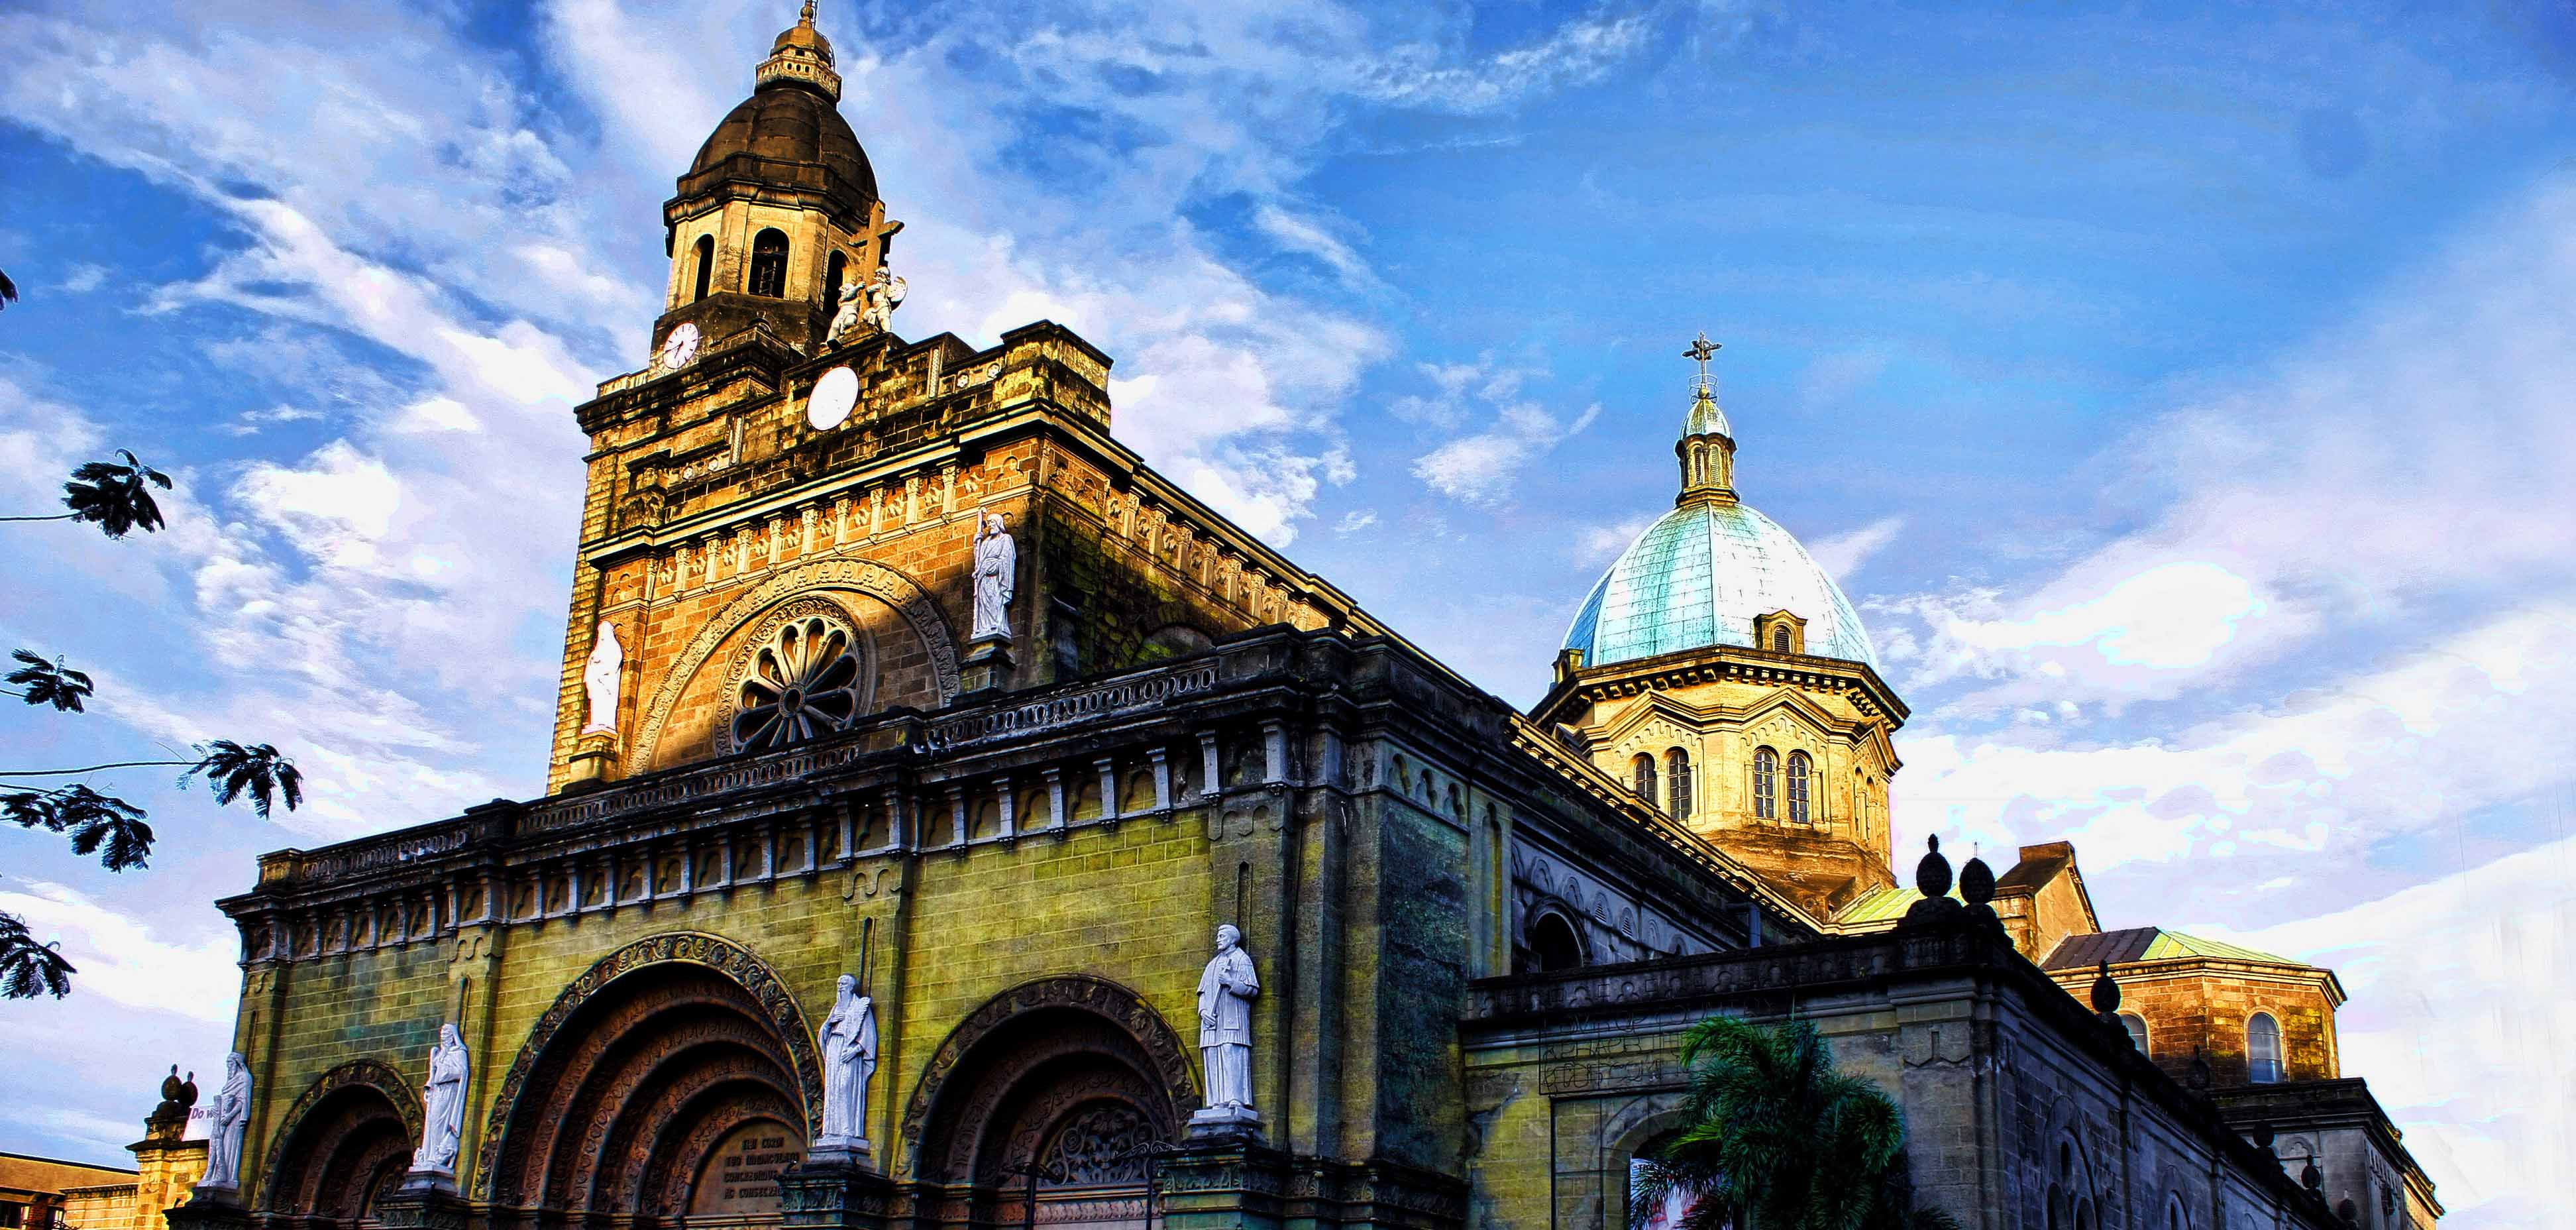 Rizal Park Hotel - Manila Cathedral